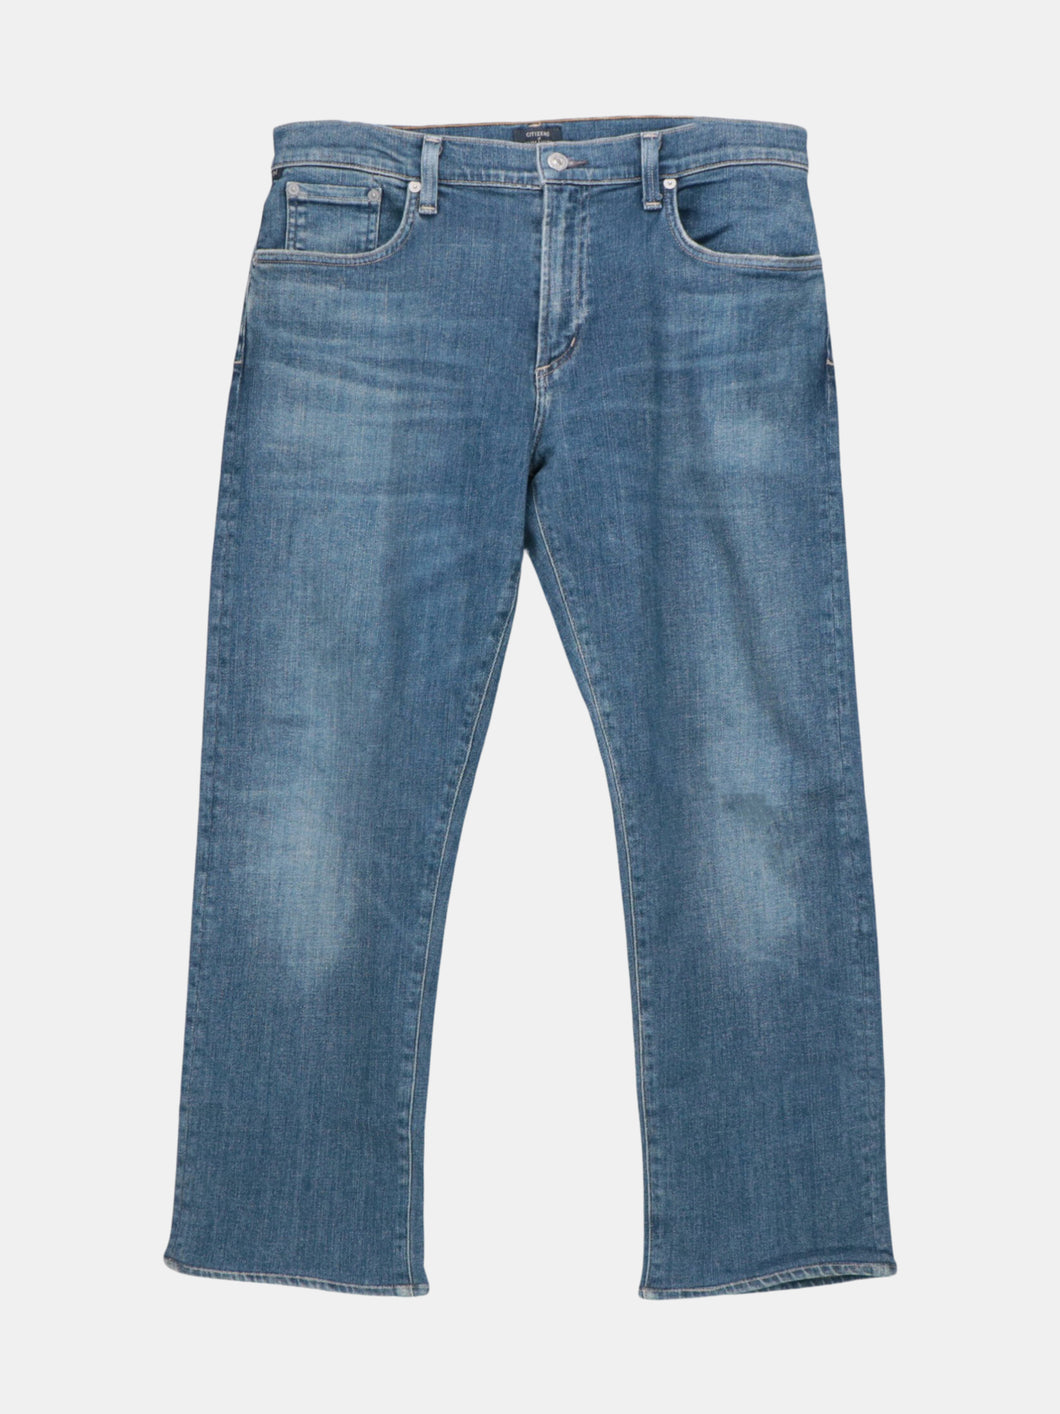 Citizens Of Humanity Men's Medium Wash Denim Core Slim Straight Leg Jeans Jean - 32